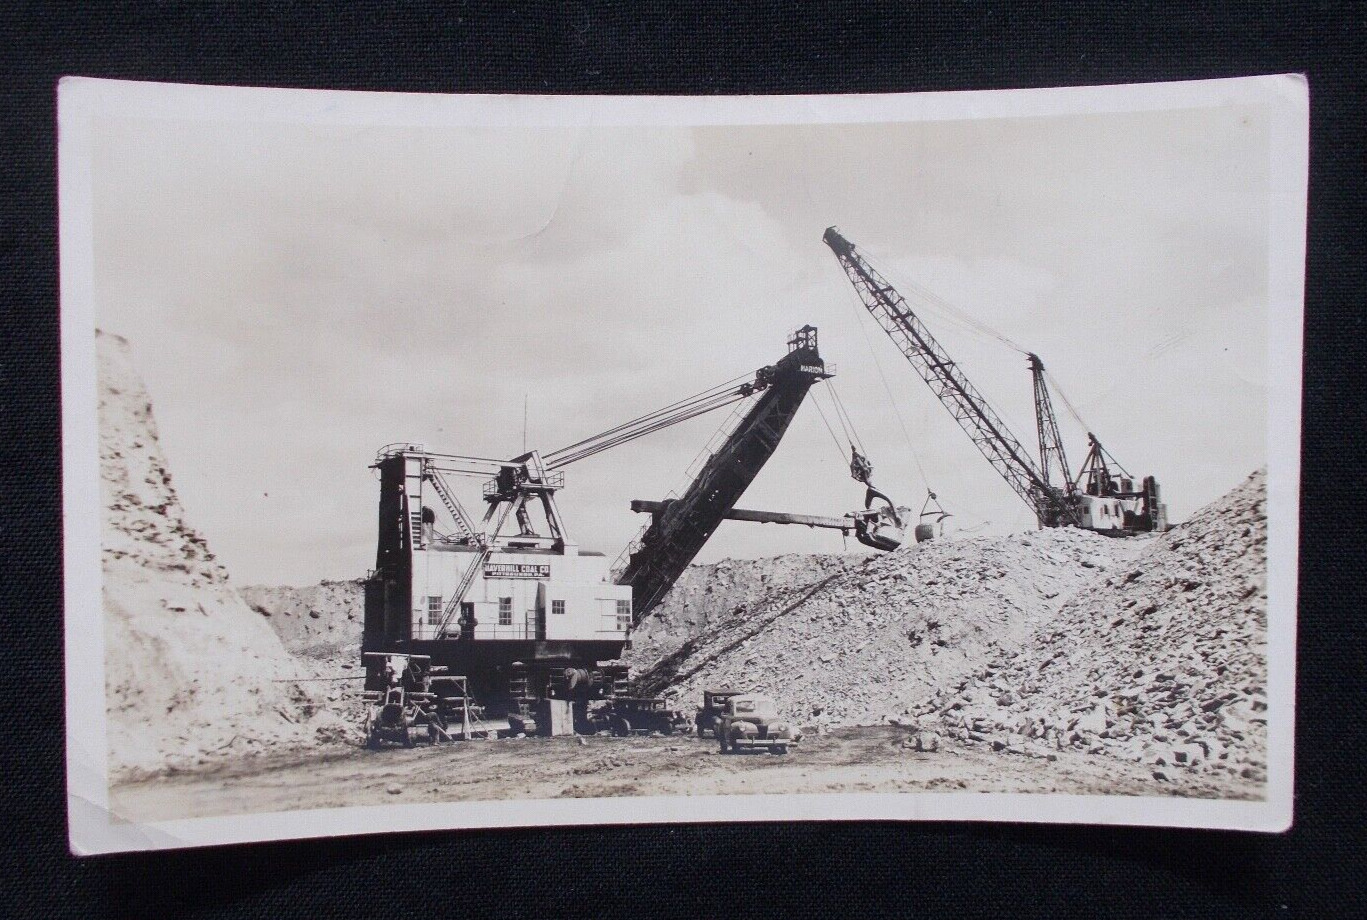 Antique Steam Shovel Original Photo Havermill Coal Company Pittsburgh Pa. c1940s